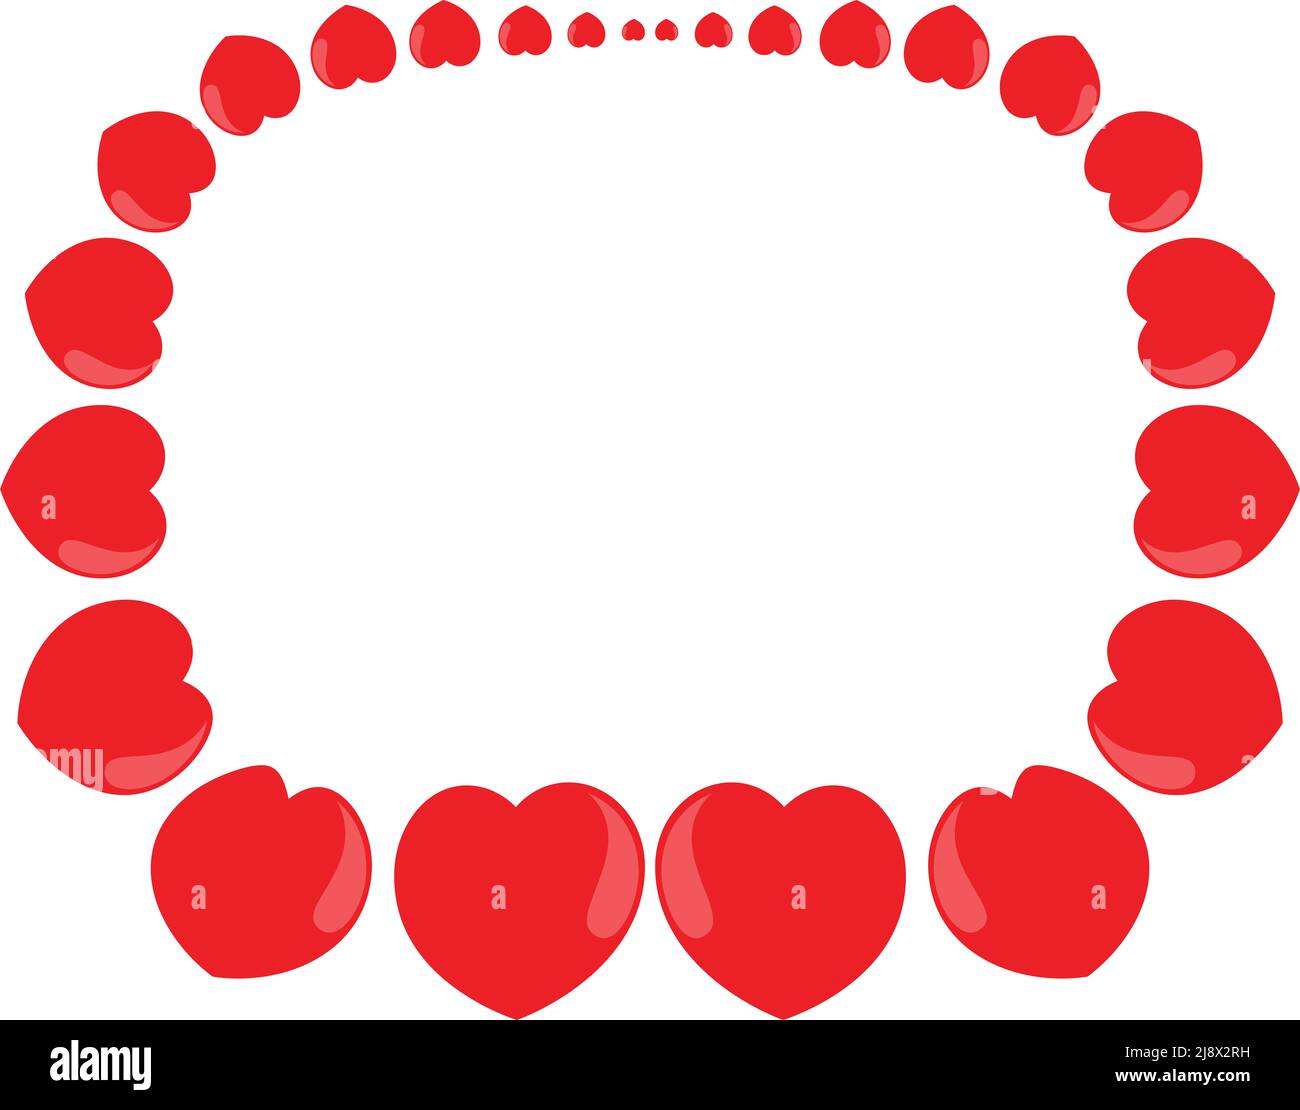 vector drawing heart shape design Stock Photo